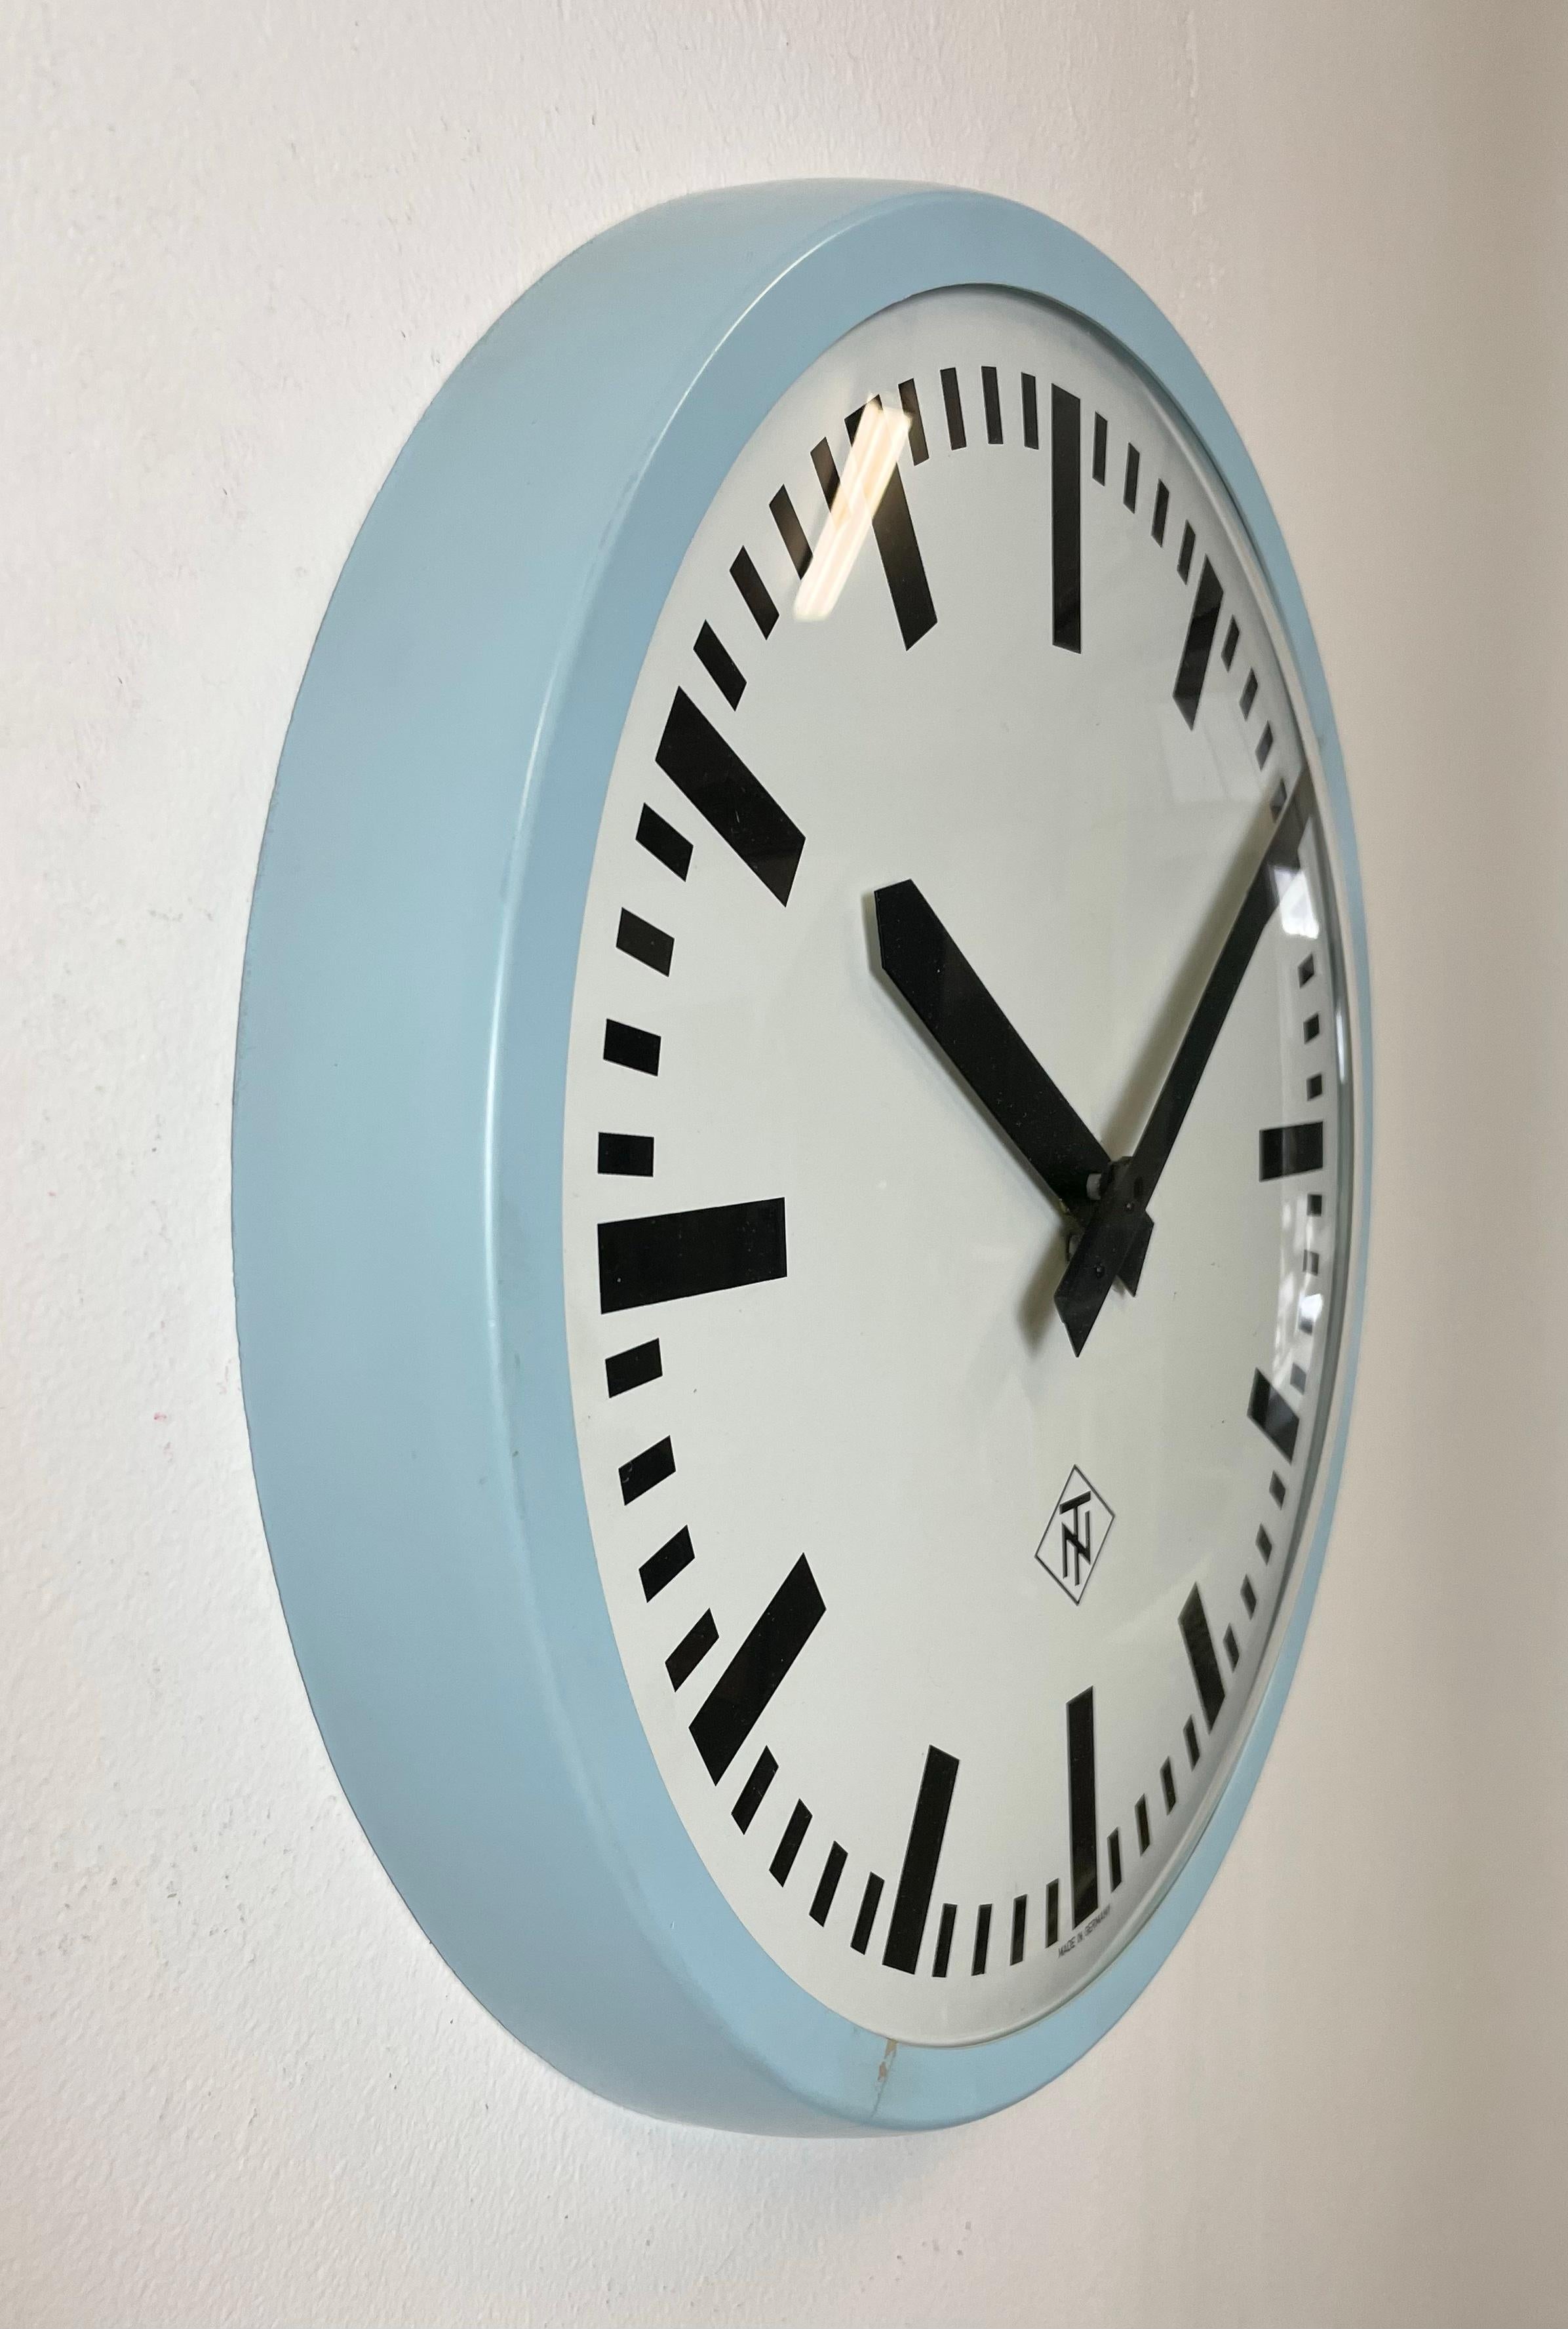 20th Century Industrial Blue Bakelite Wall Clock from TN, 1960s